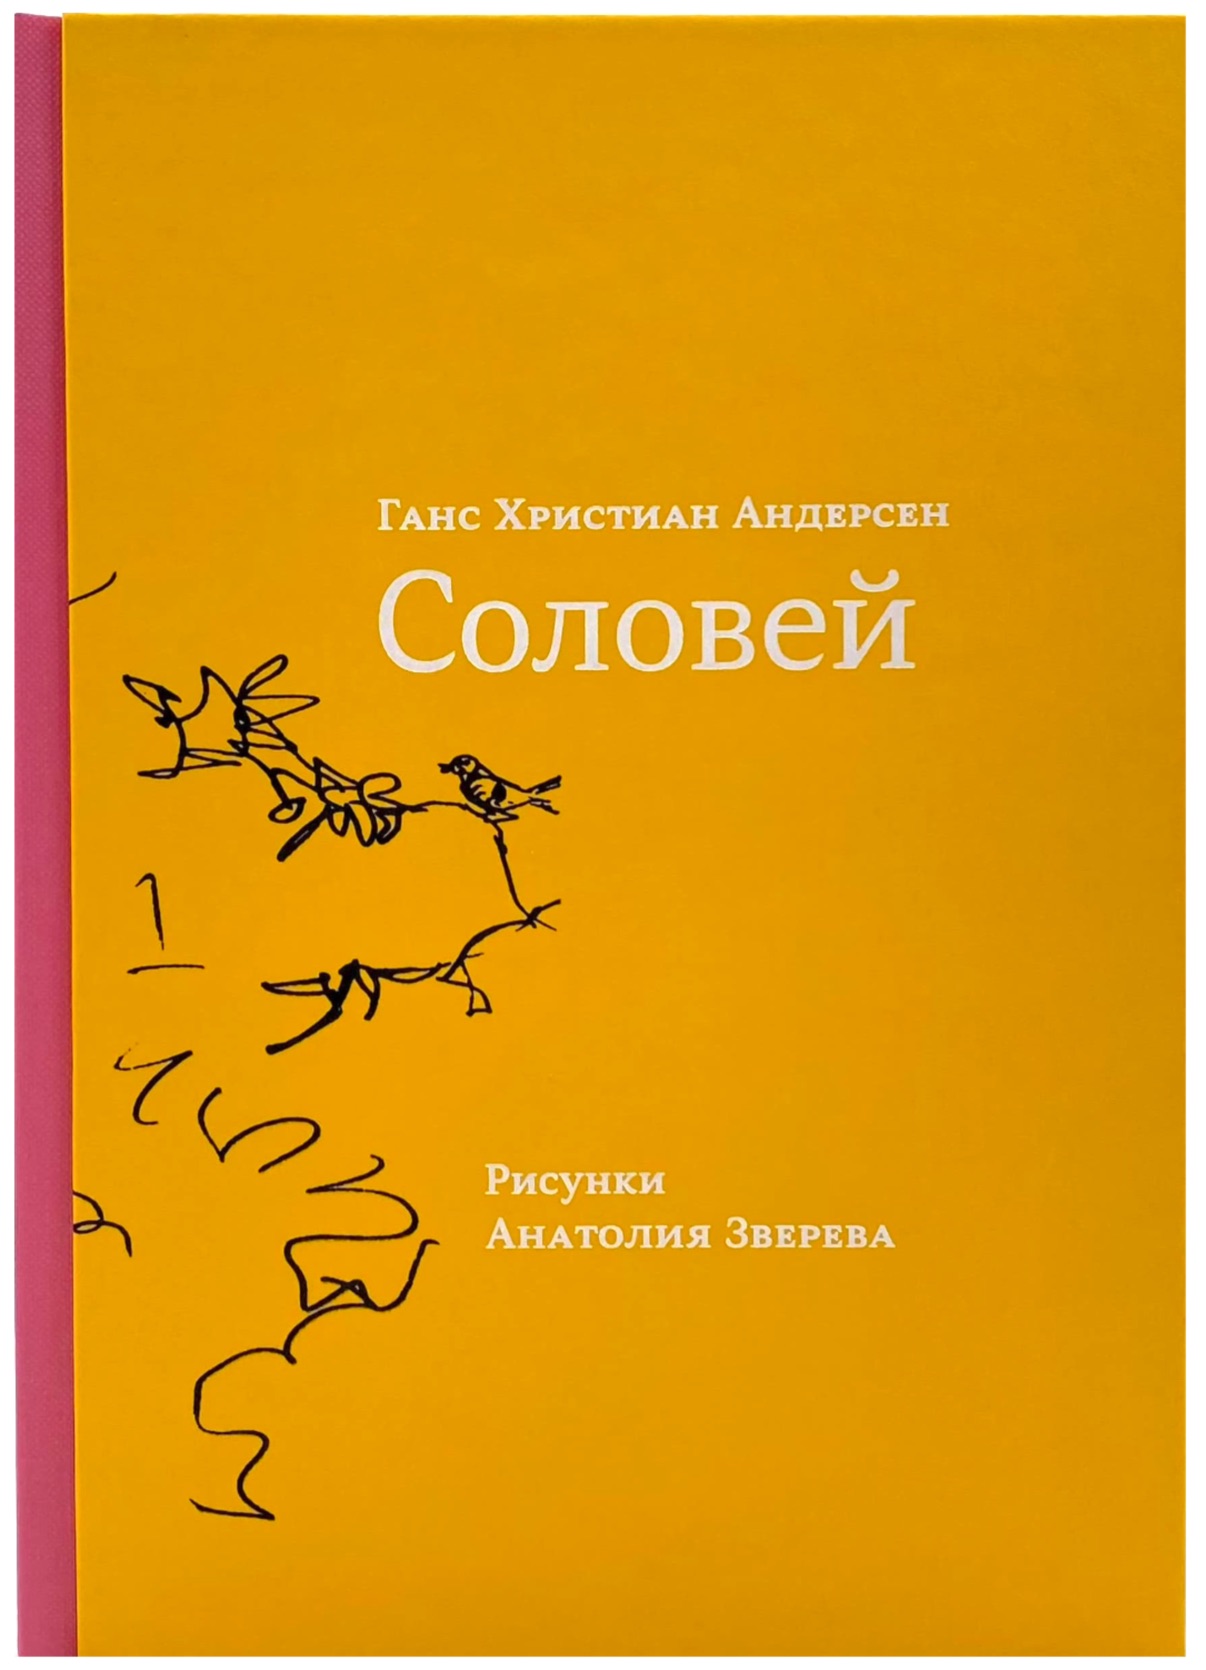 Соловей Андерсен книга